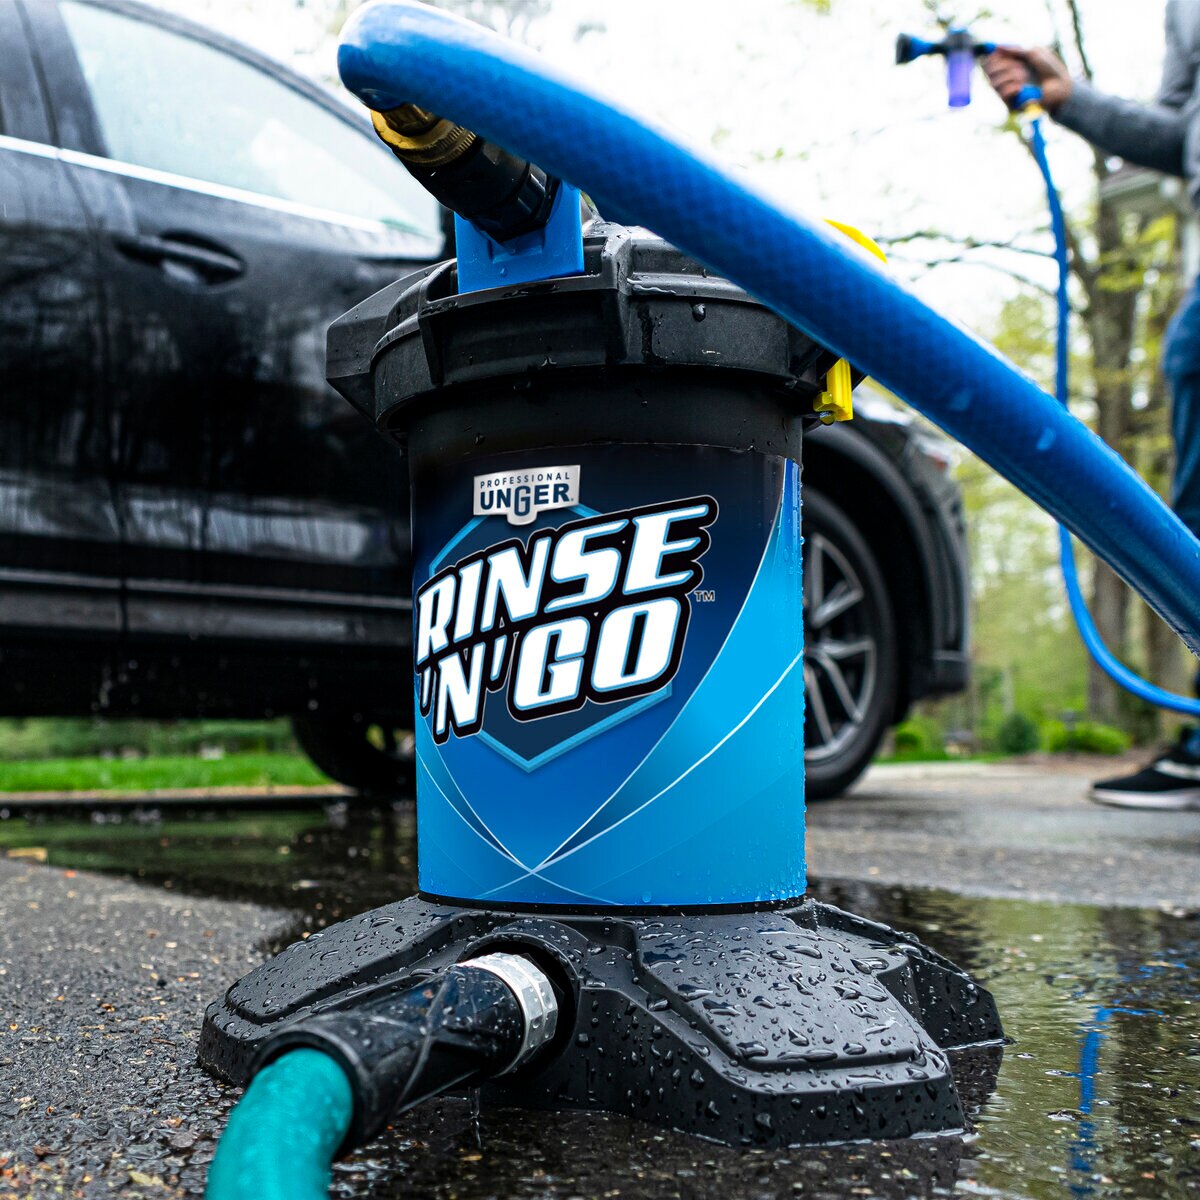 Unger Rinse'n'Go 洗車用純水器 樹脂フィルター2個付き | Costco Japan